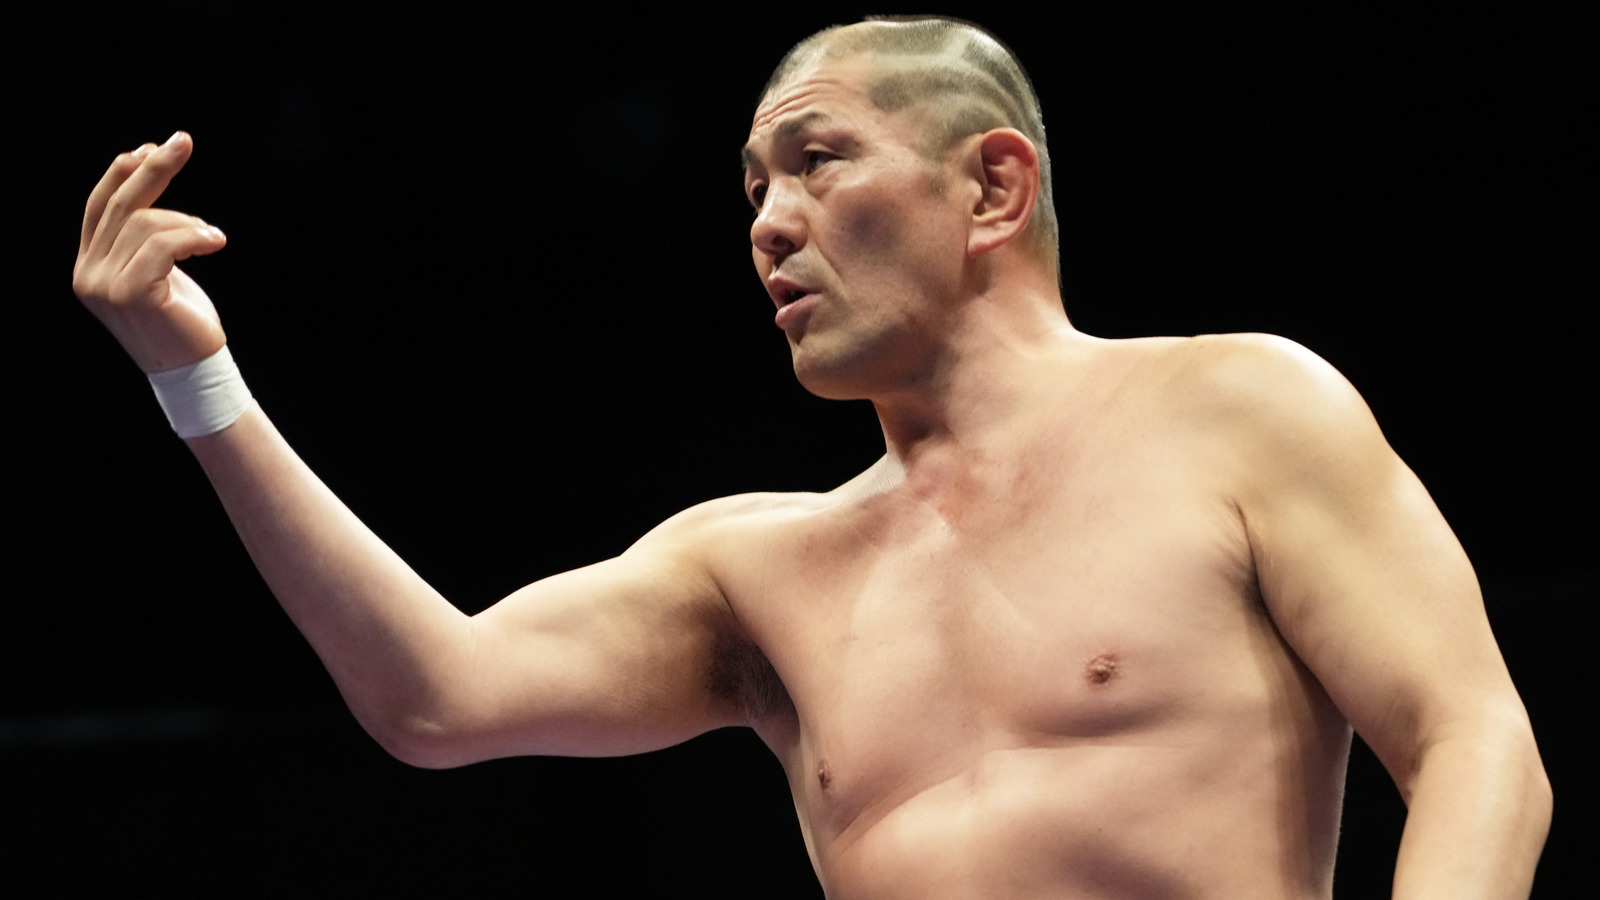 Minoru Suzuki shocks Chris Jericho at AEW Dynamite, FTW title match set for next week